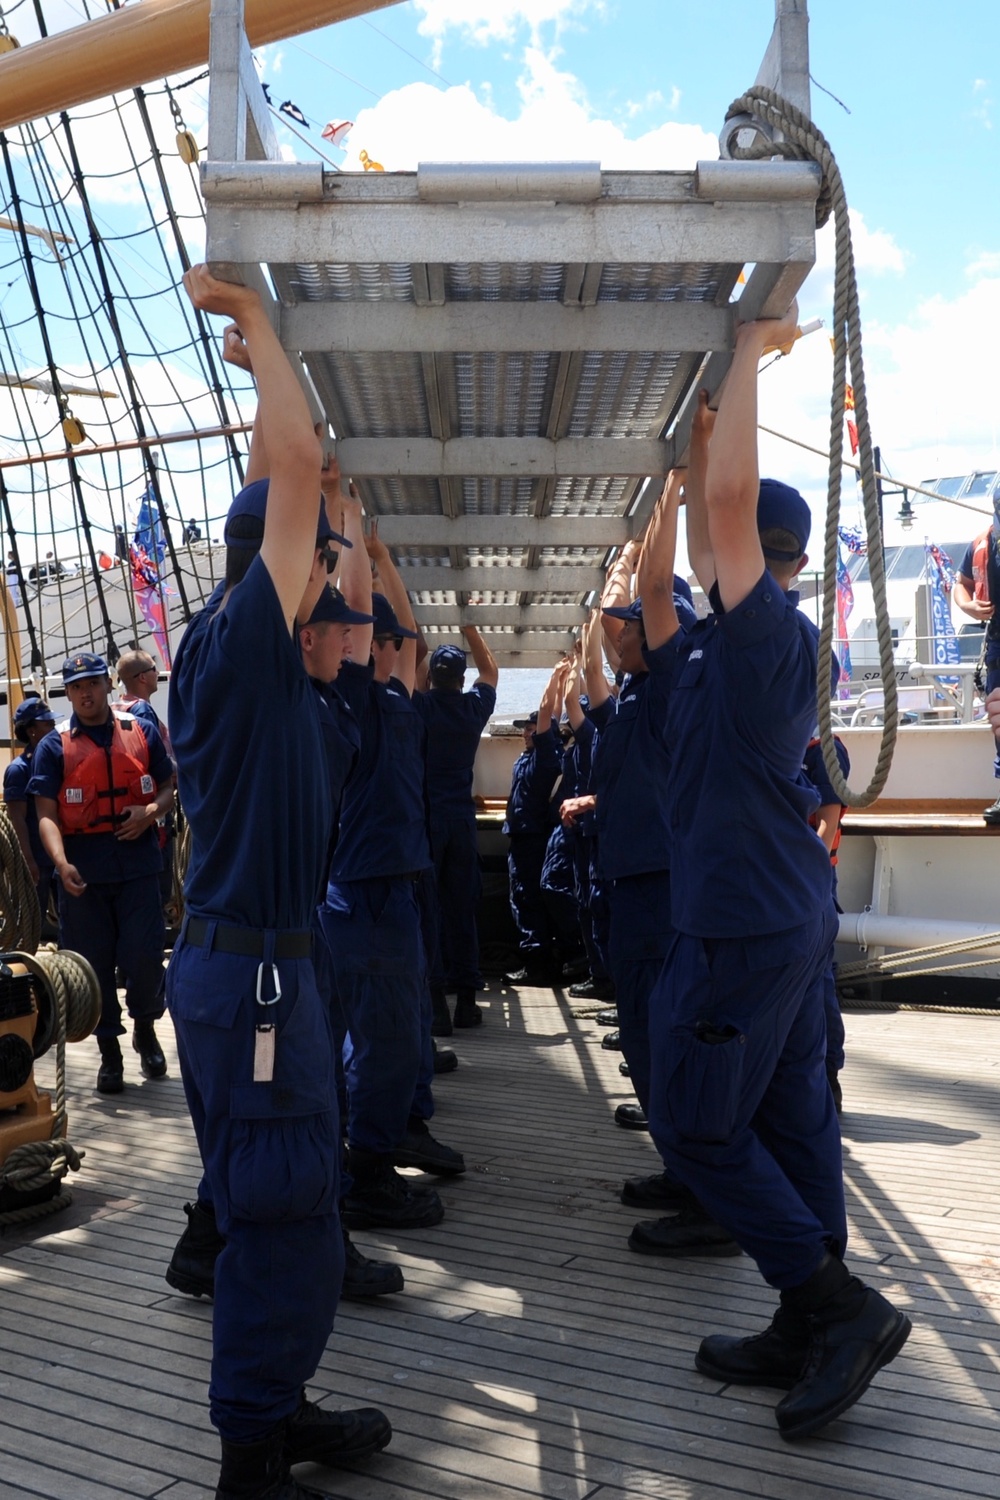 Coast Guard Cutter Eagle participates in parade of sail